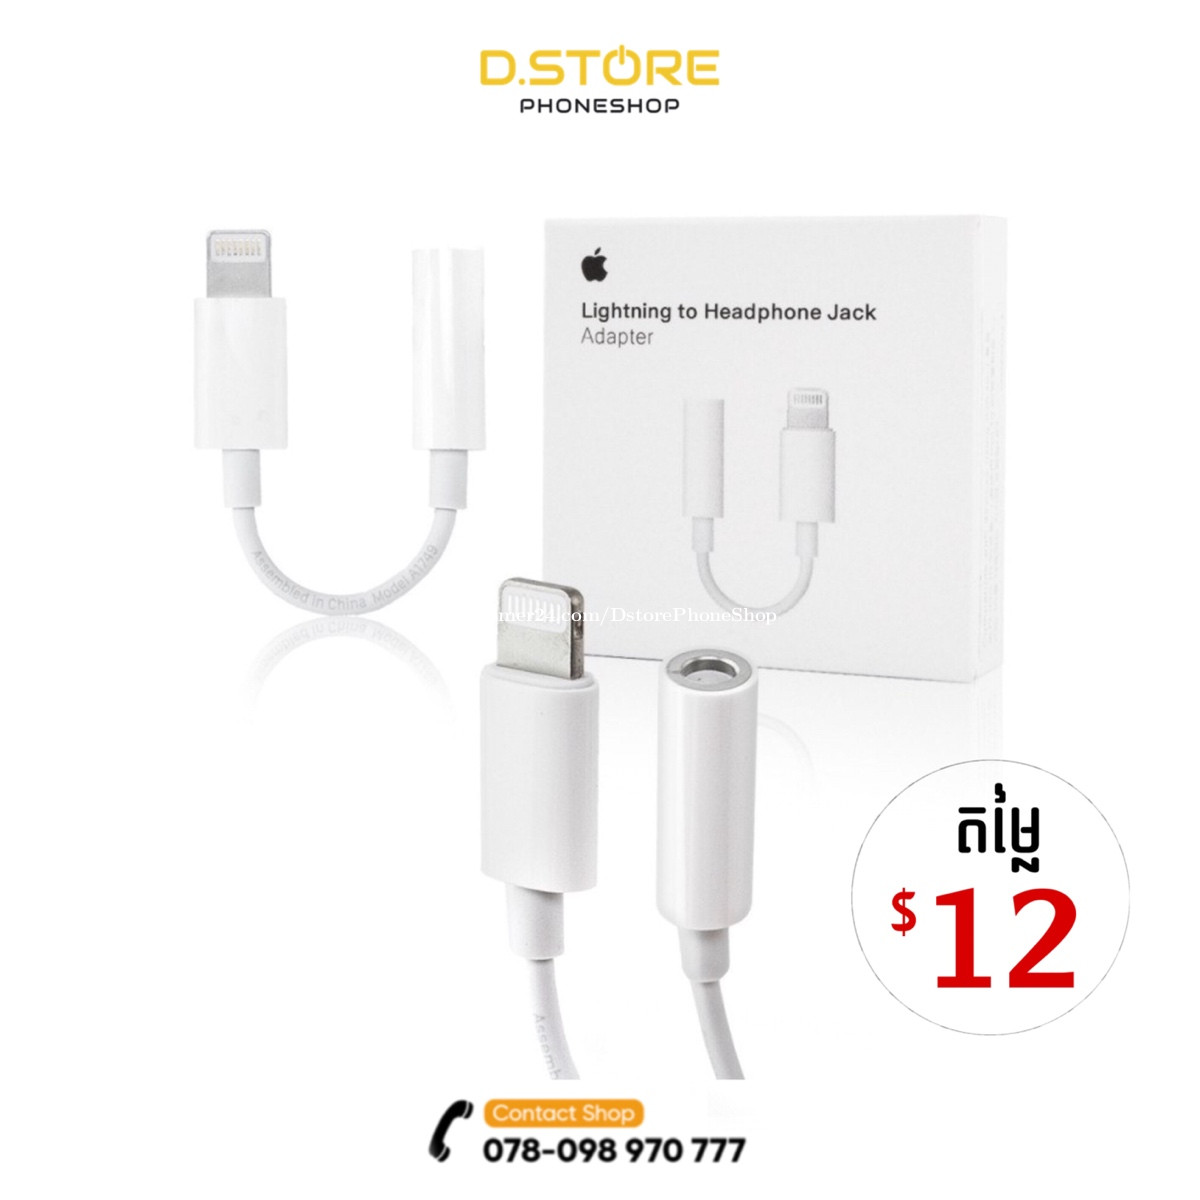 Apple - Lightning to Headphone Jack Adapter Price $12 in Phnom Penh,  Cambodia - D-Store Phone Shop 